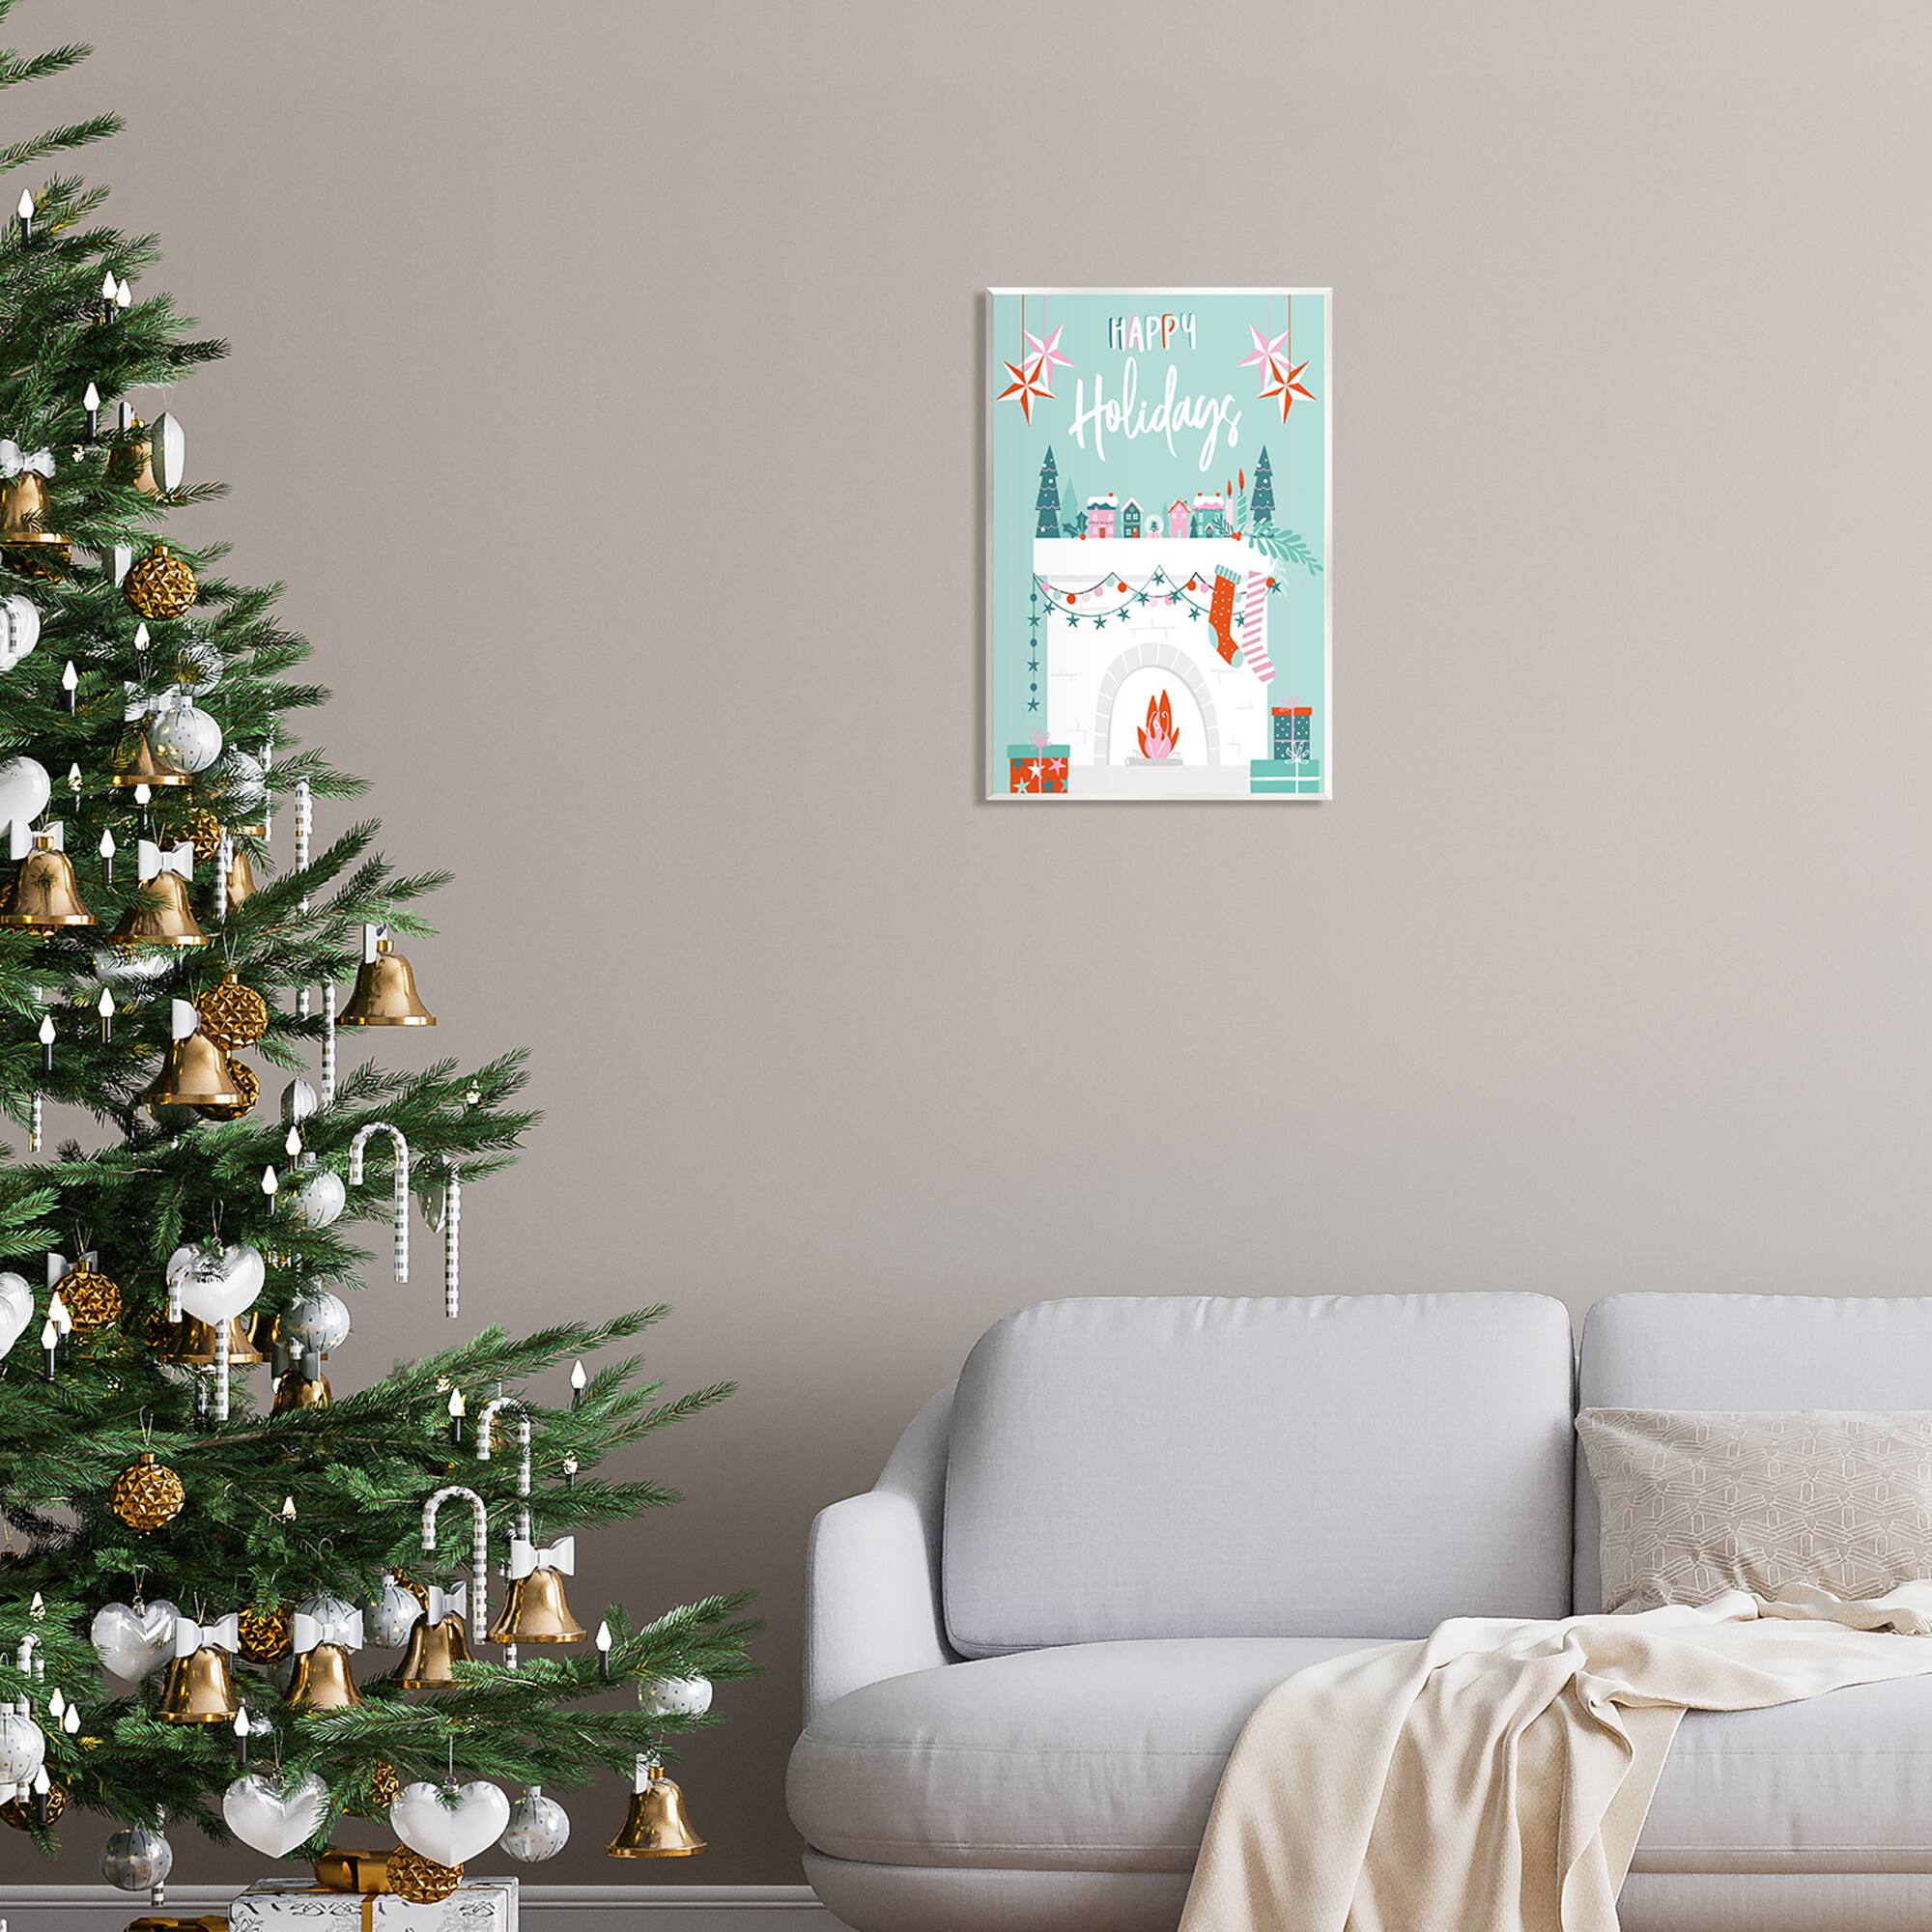 Stupell Industries Happy Holidays Festive Mantel Stockings Wall Plaque Art